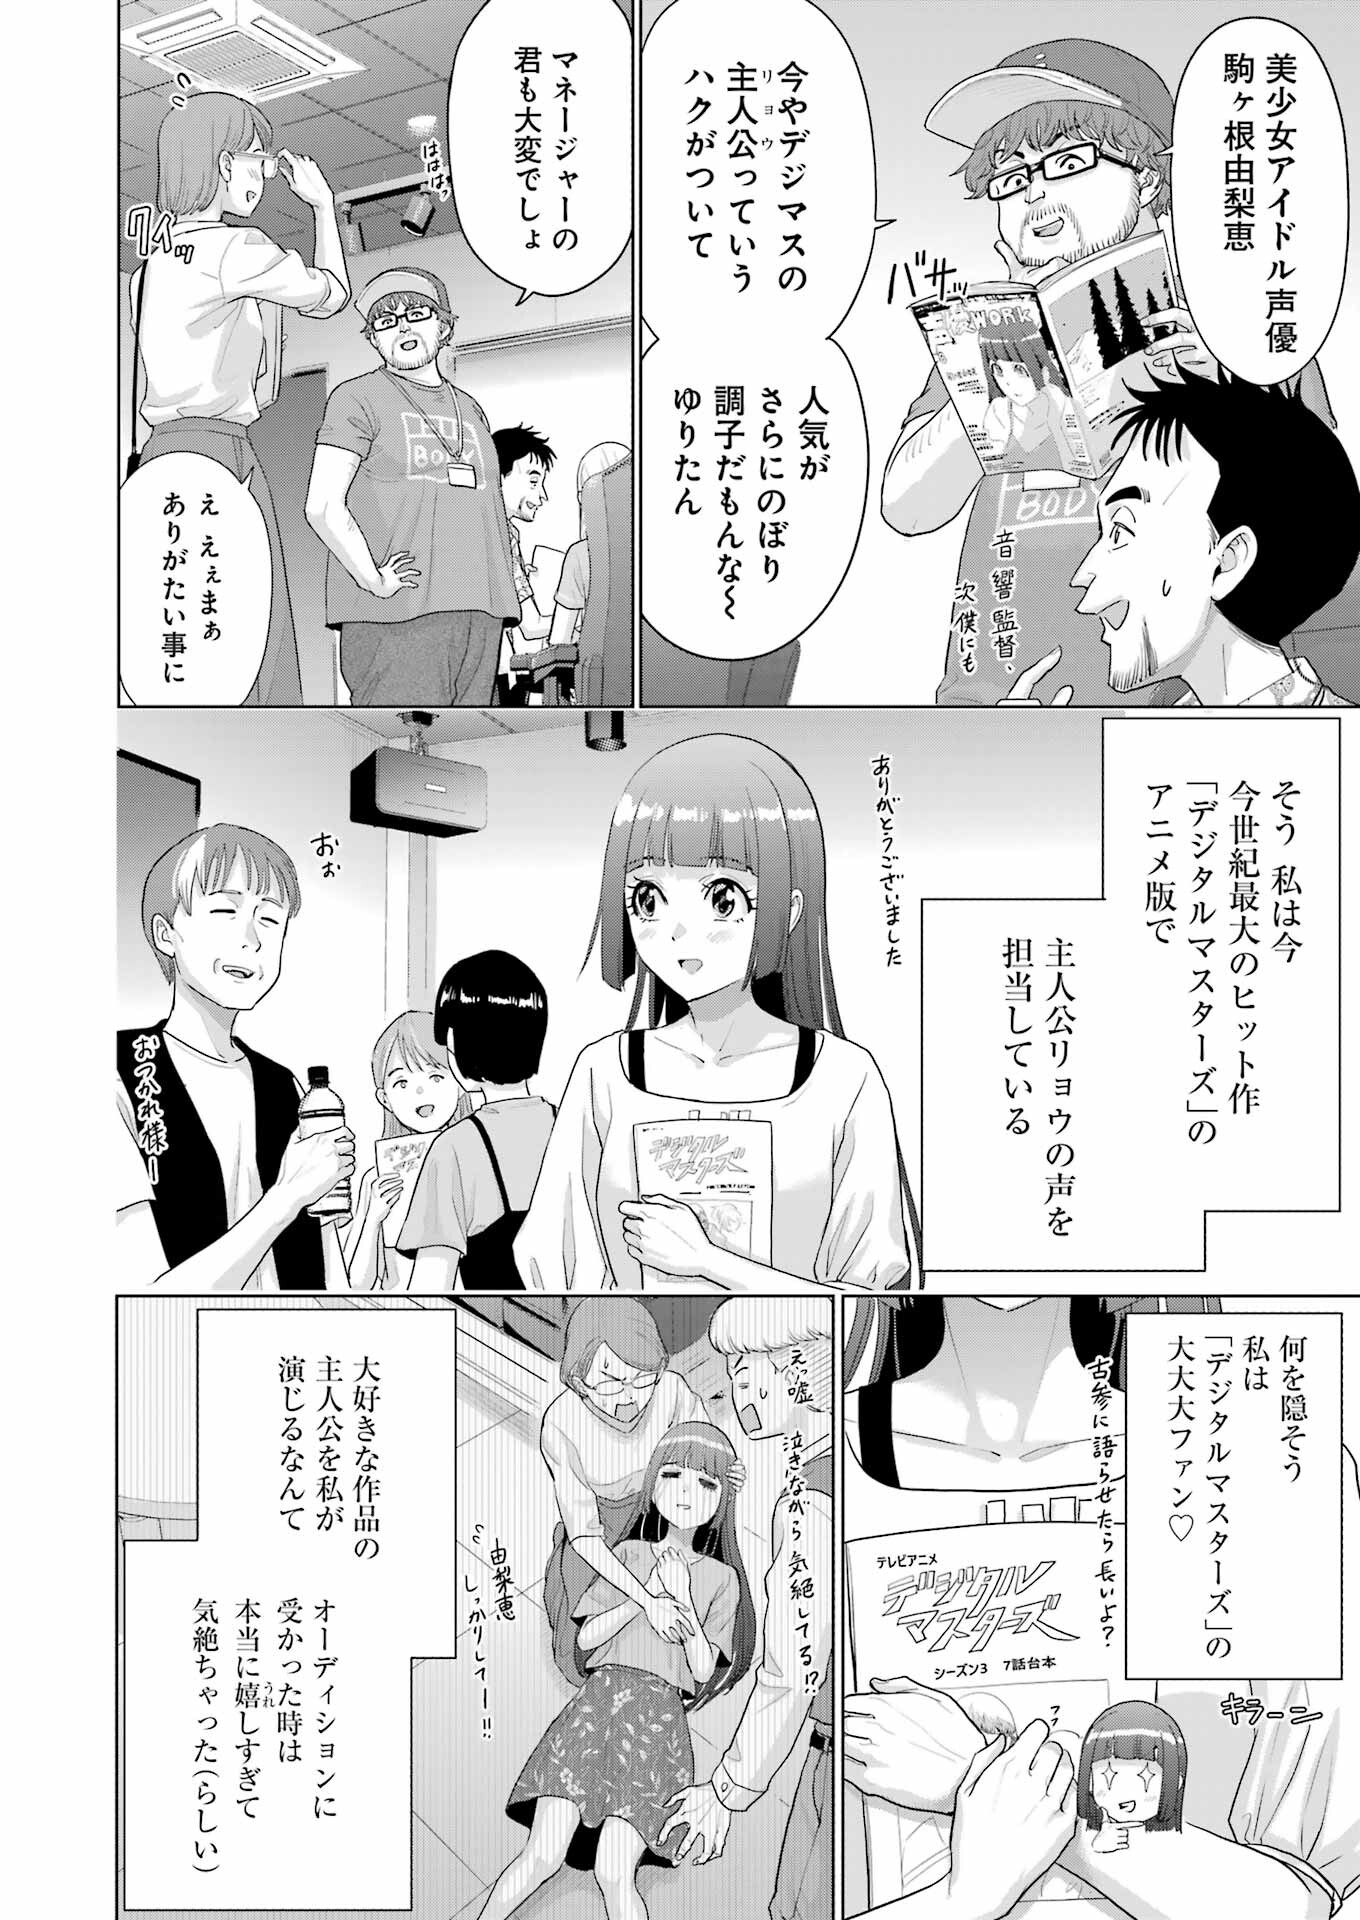 Koukousei Web Sakka no Mote Seikatsu - Chapter 30 - Page 4